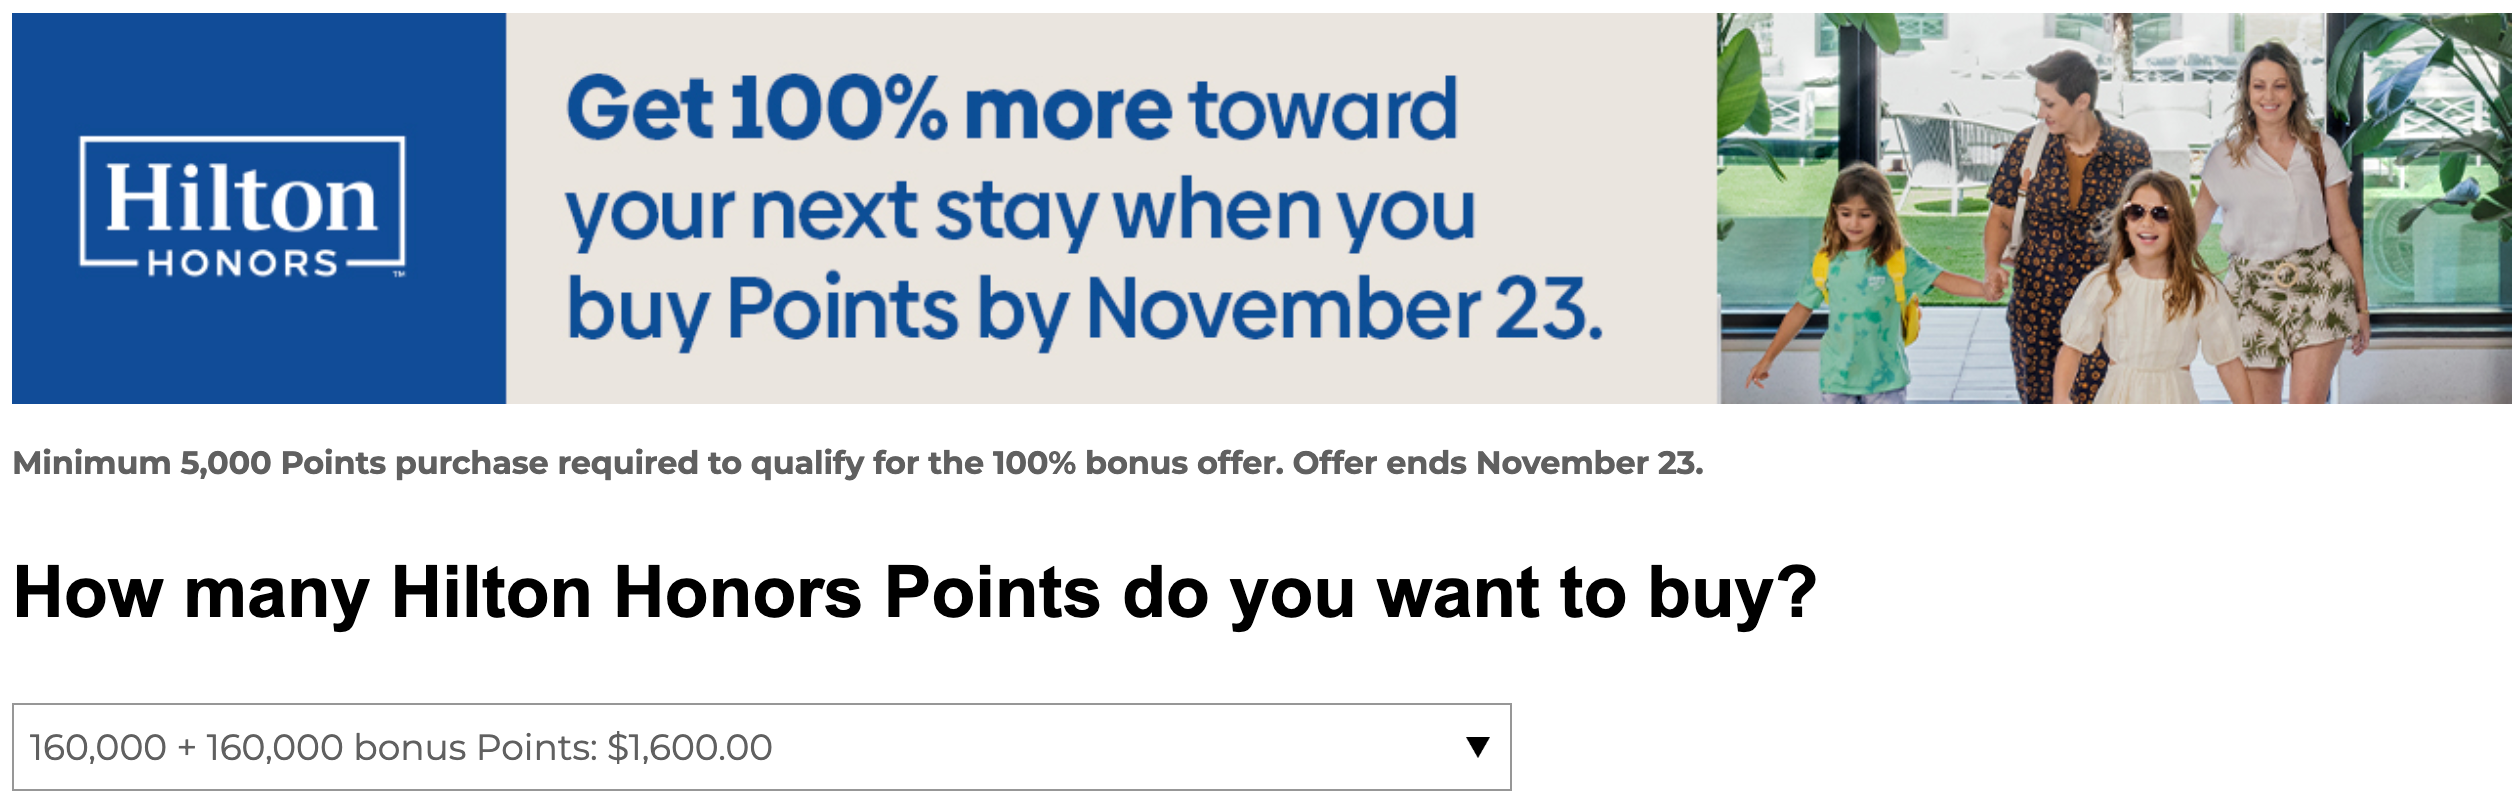 Buy Hilton points with a 100% bonus